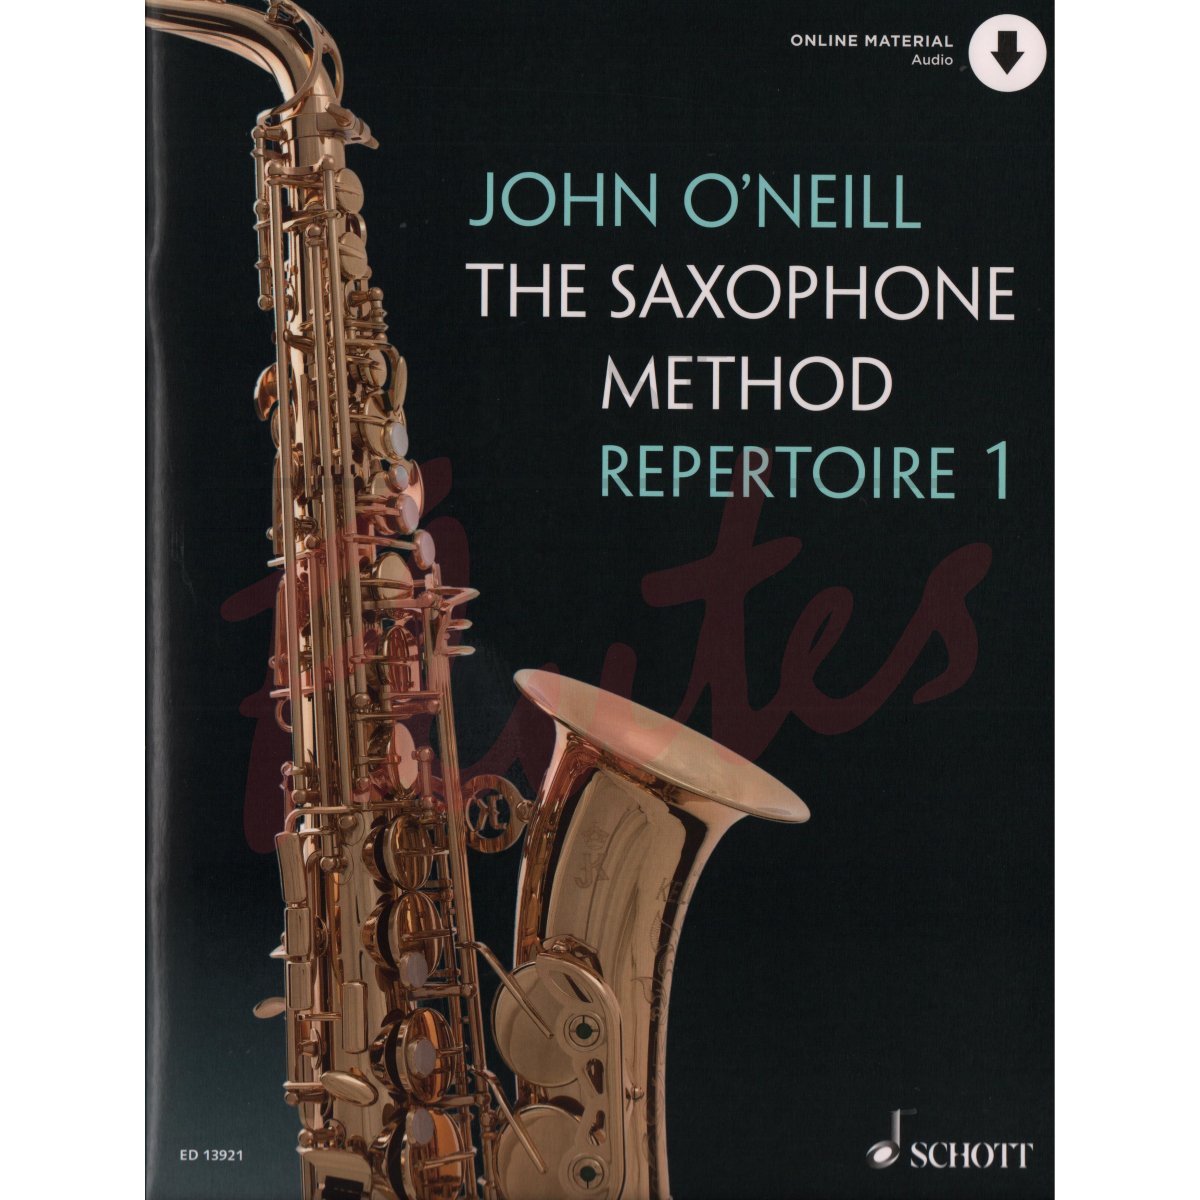 The Saxophone Method Repertoire 1